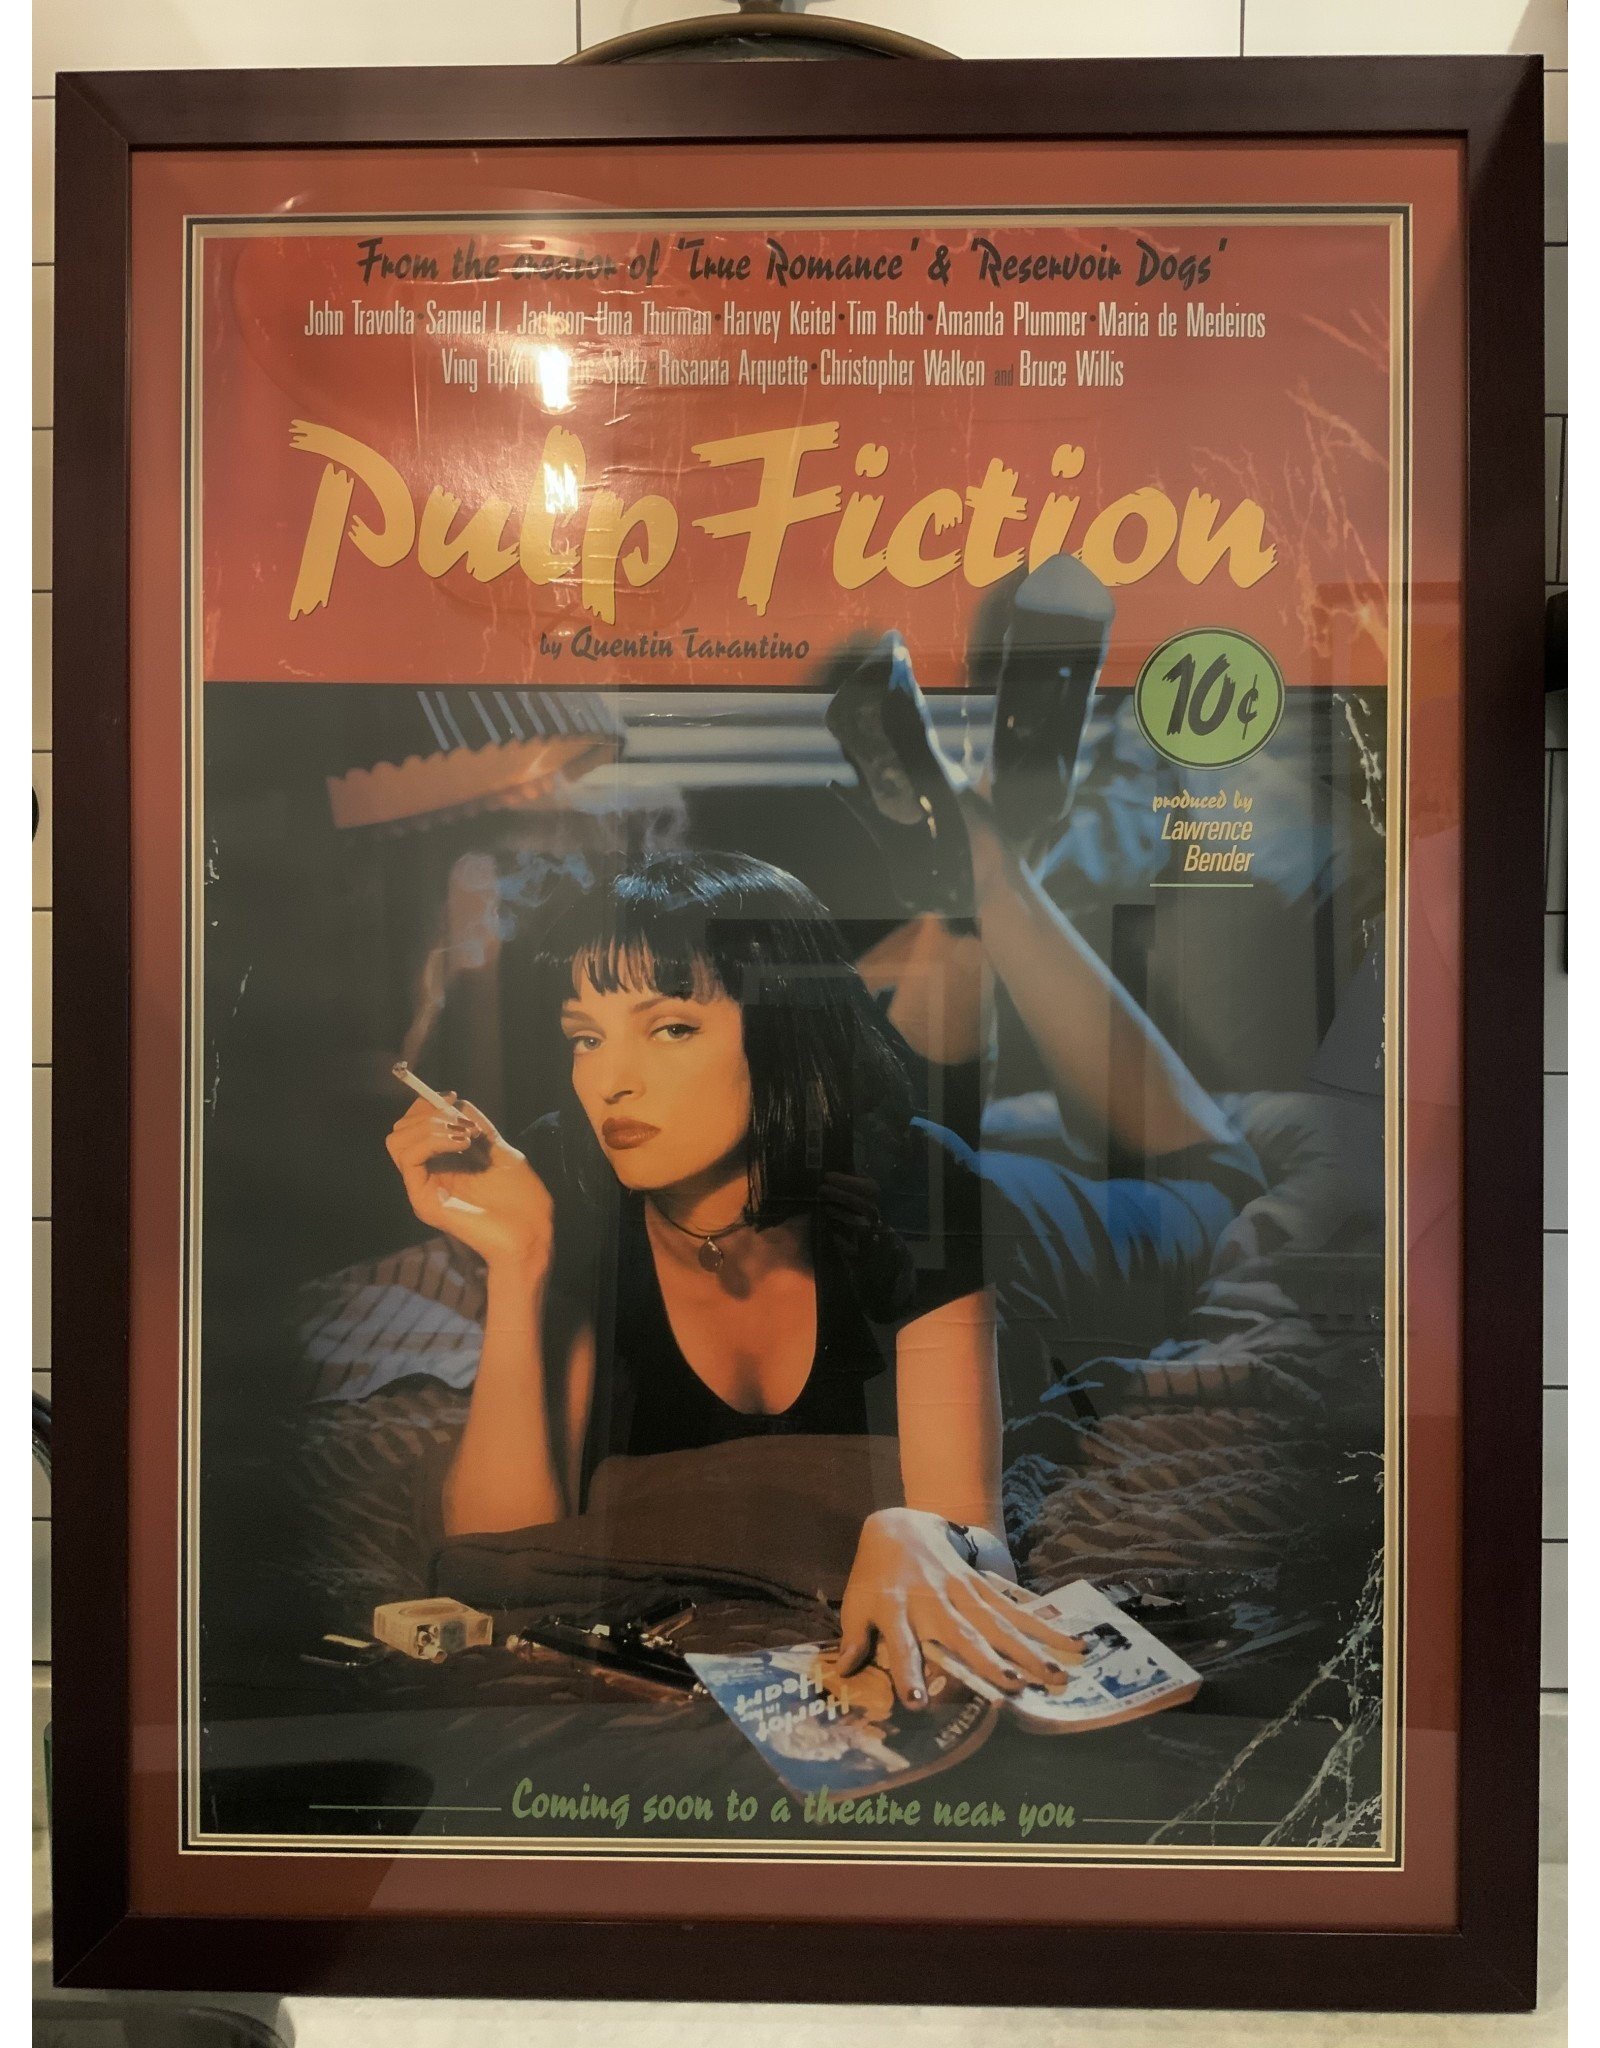 ORIGINAL POSTER. Pulp Fiction Original 1994